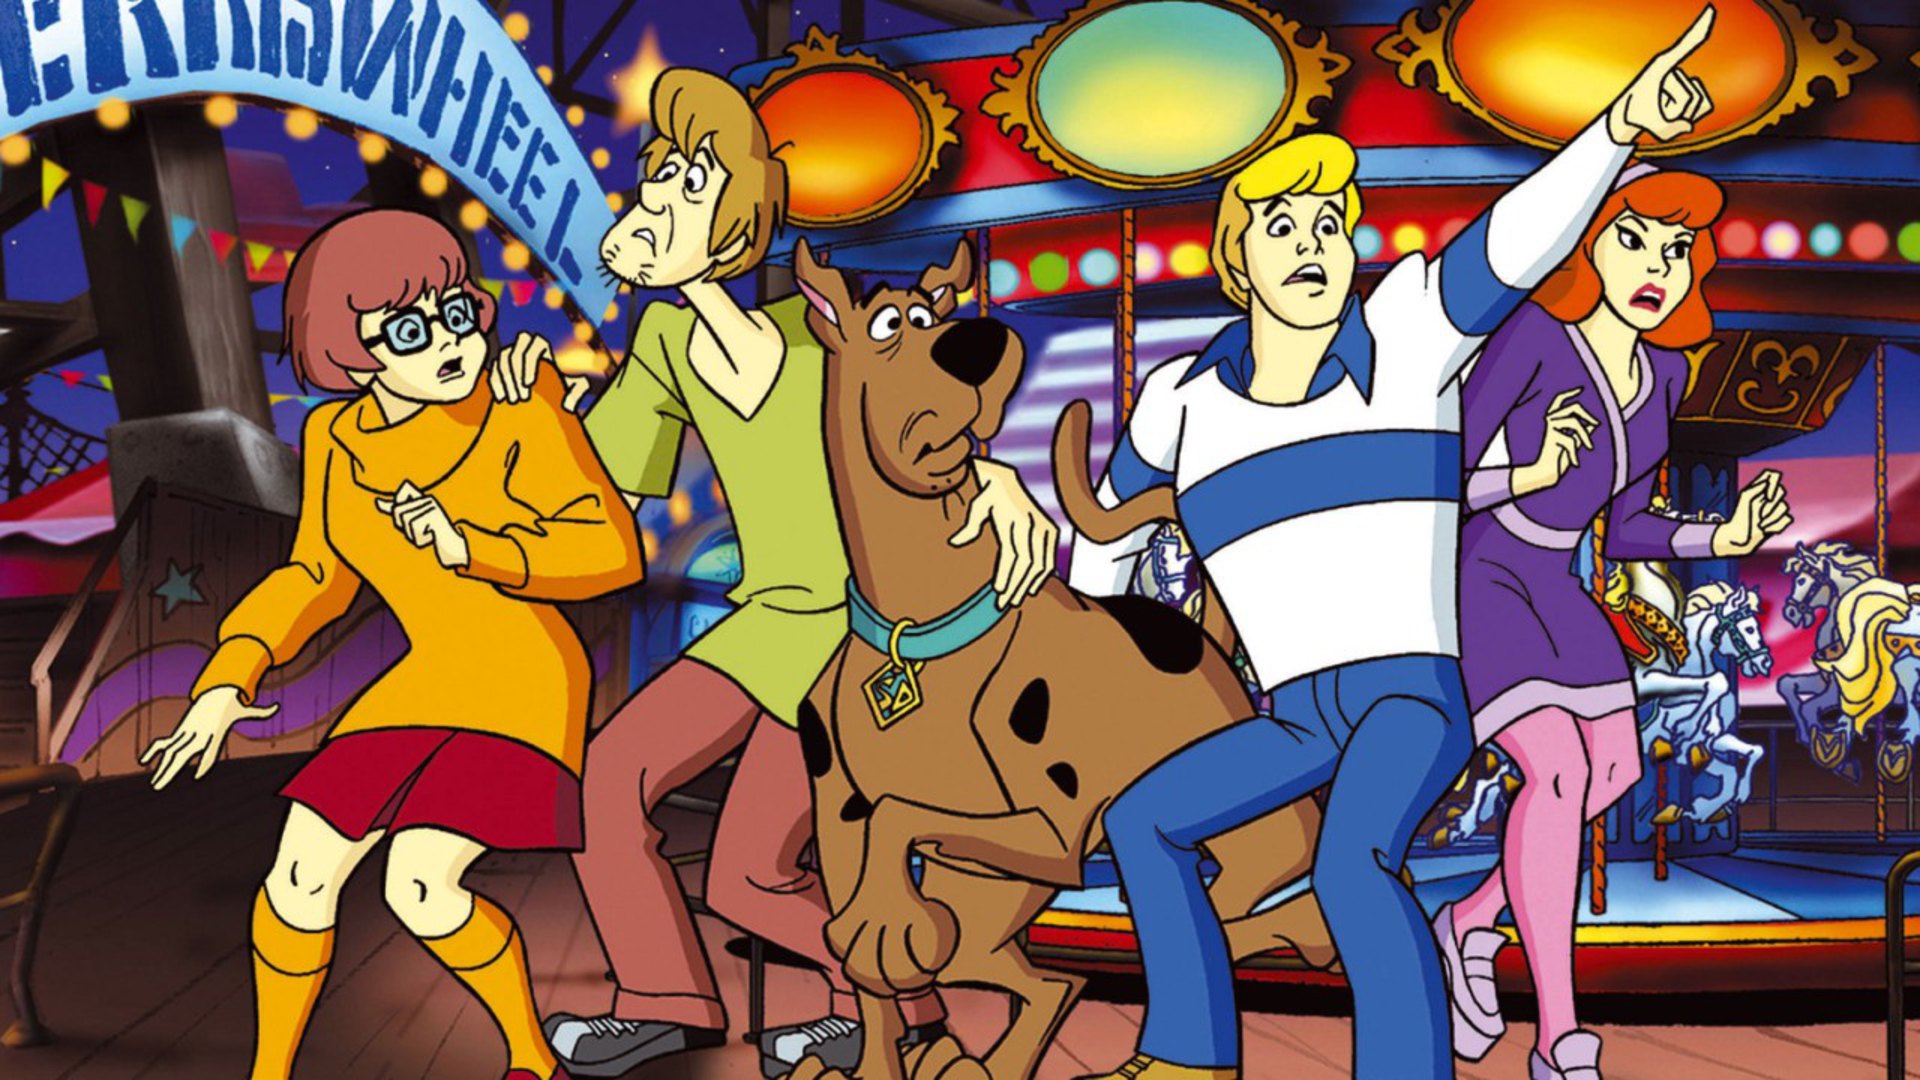 What's New Scooby-Doo? memos (TV Series 2002 - 2006)